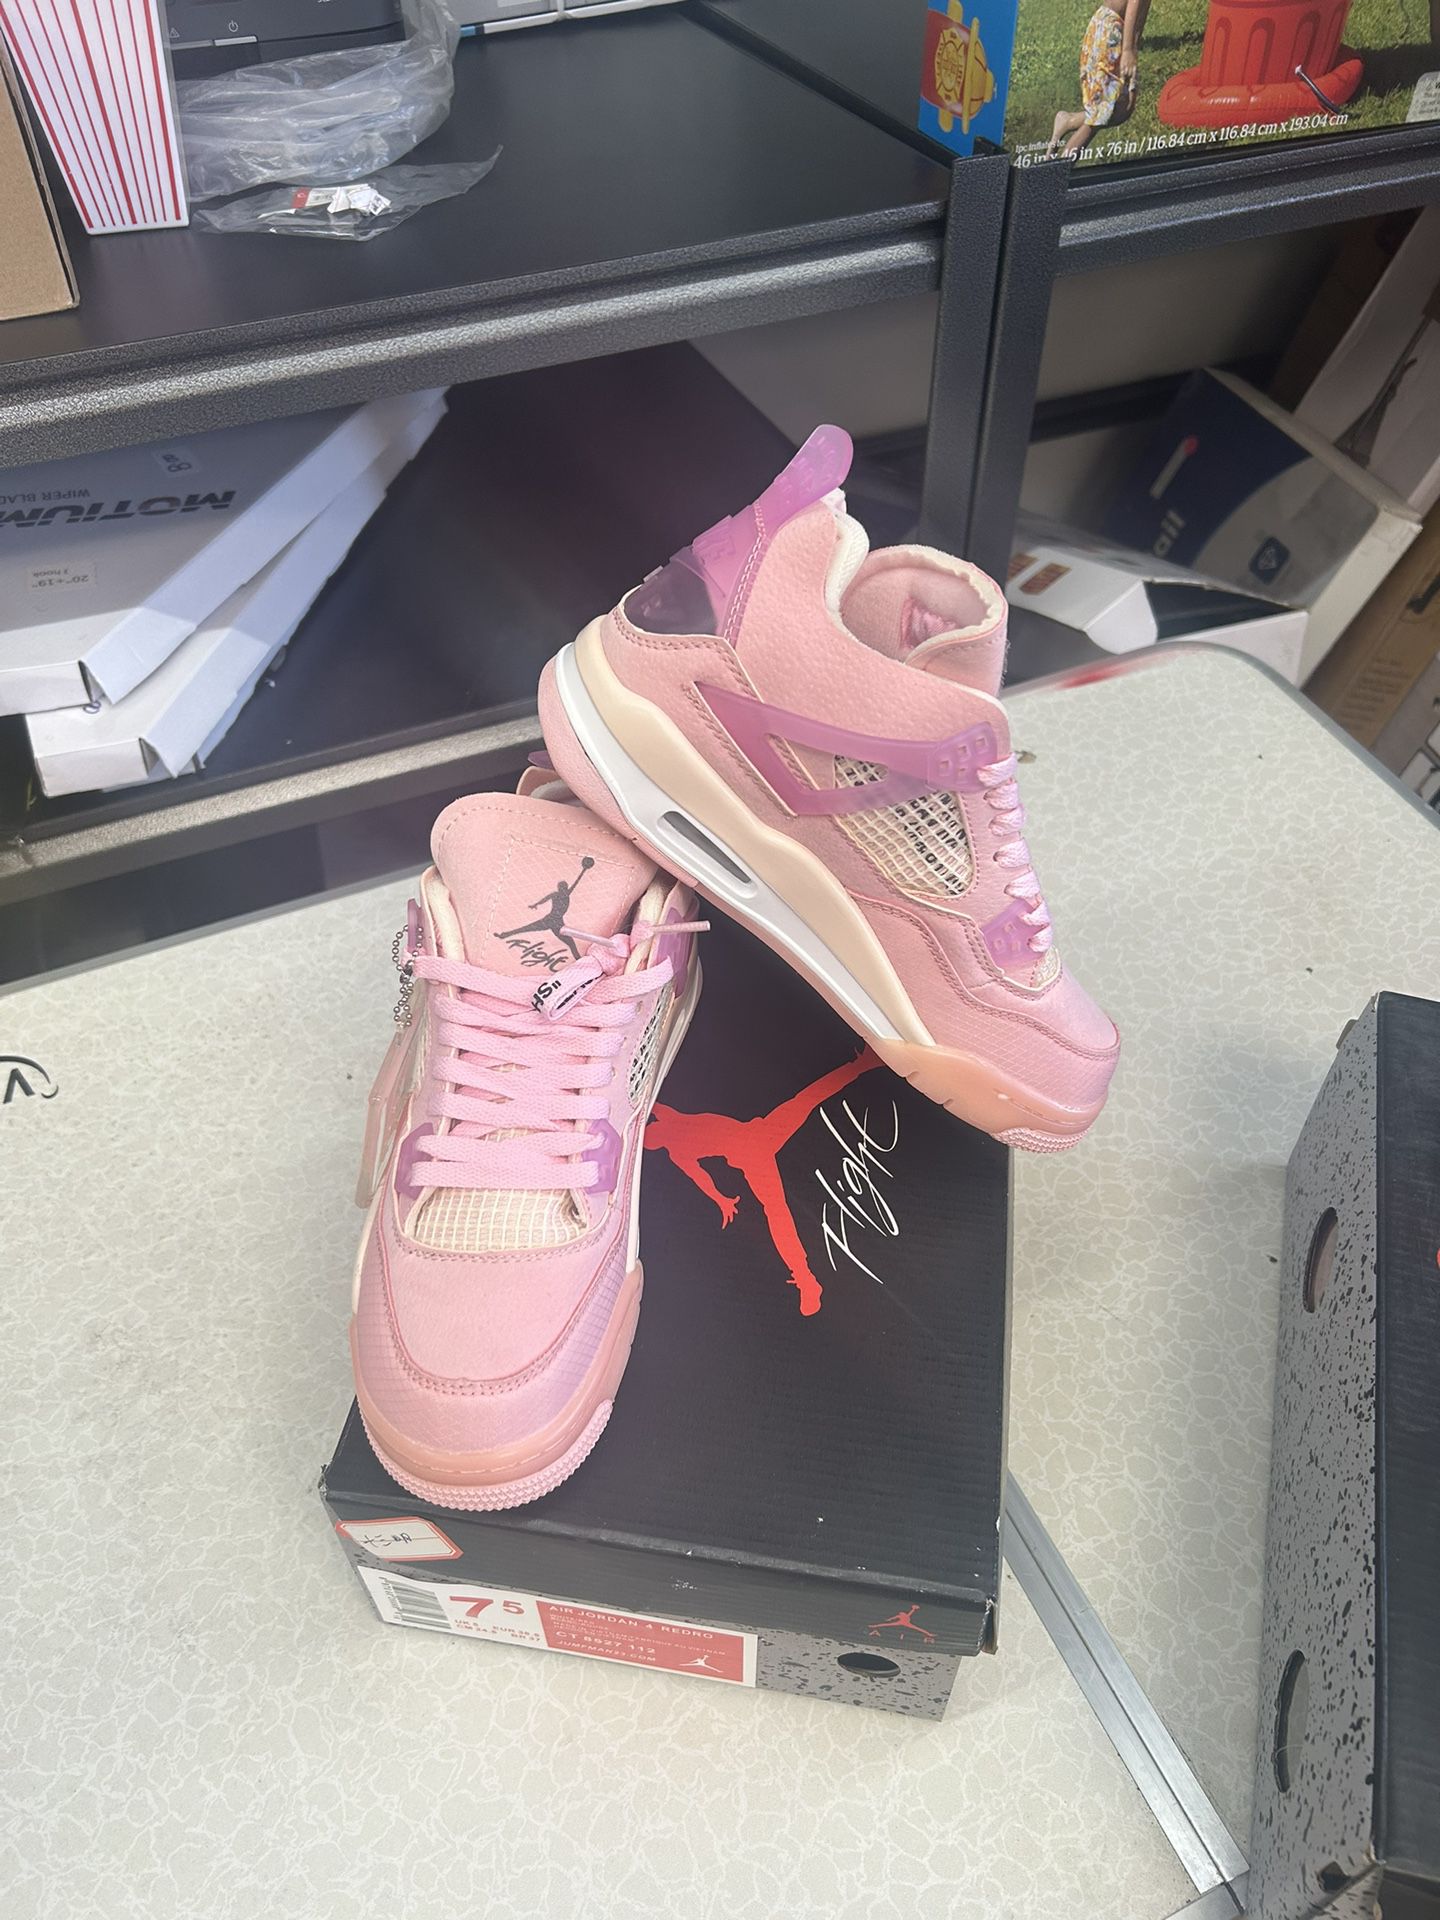 Pink Jordan 4